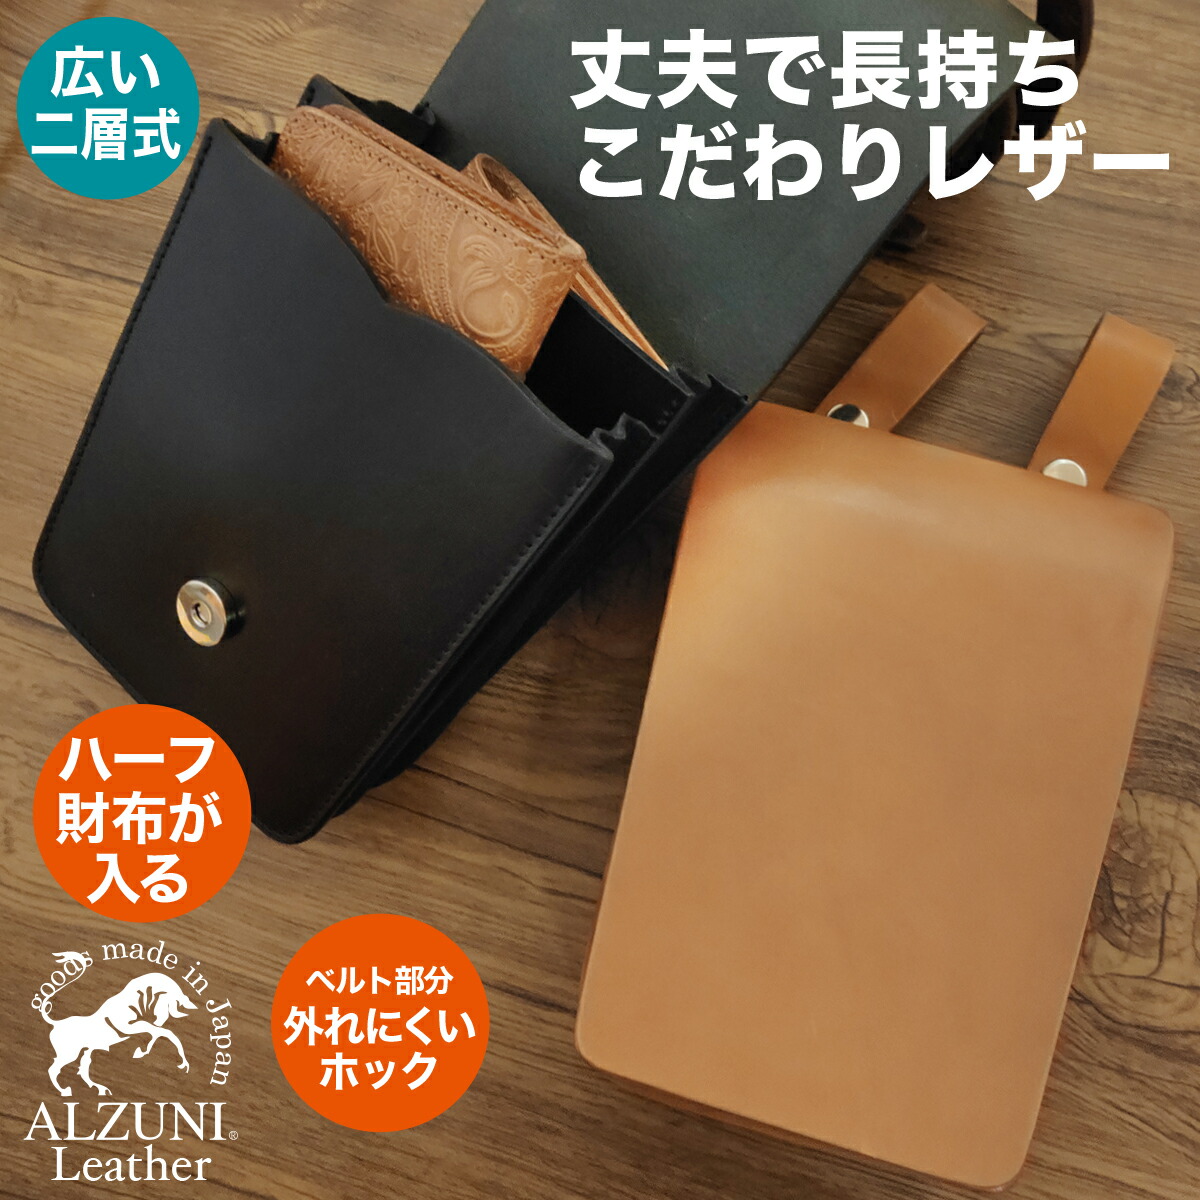 shop.r10s.jp/alzuni/cabinet/07554788/07554812/imgr...